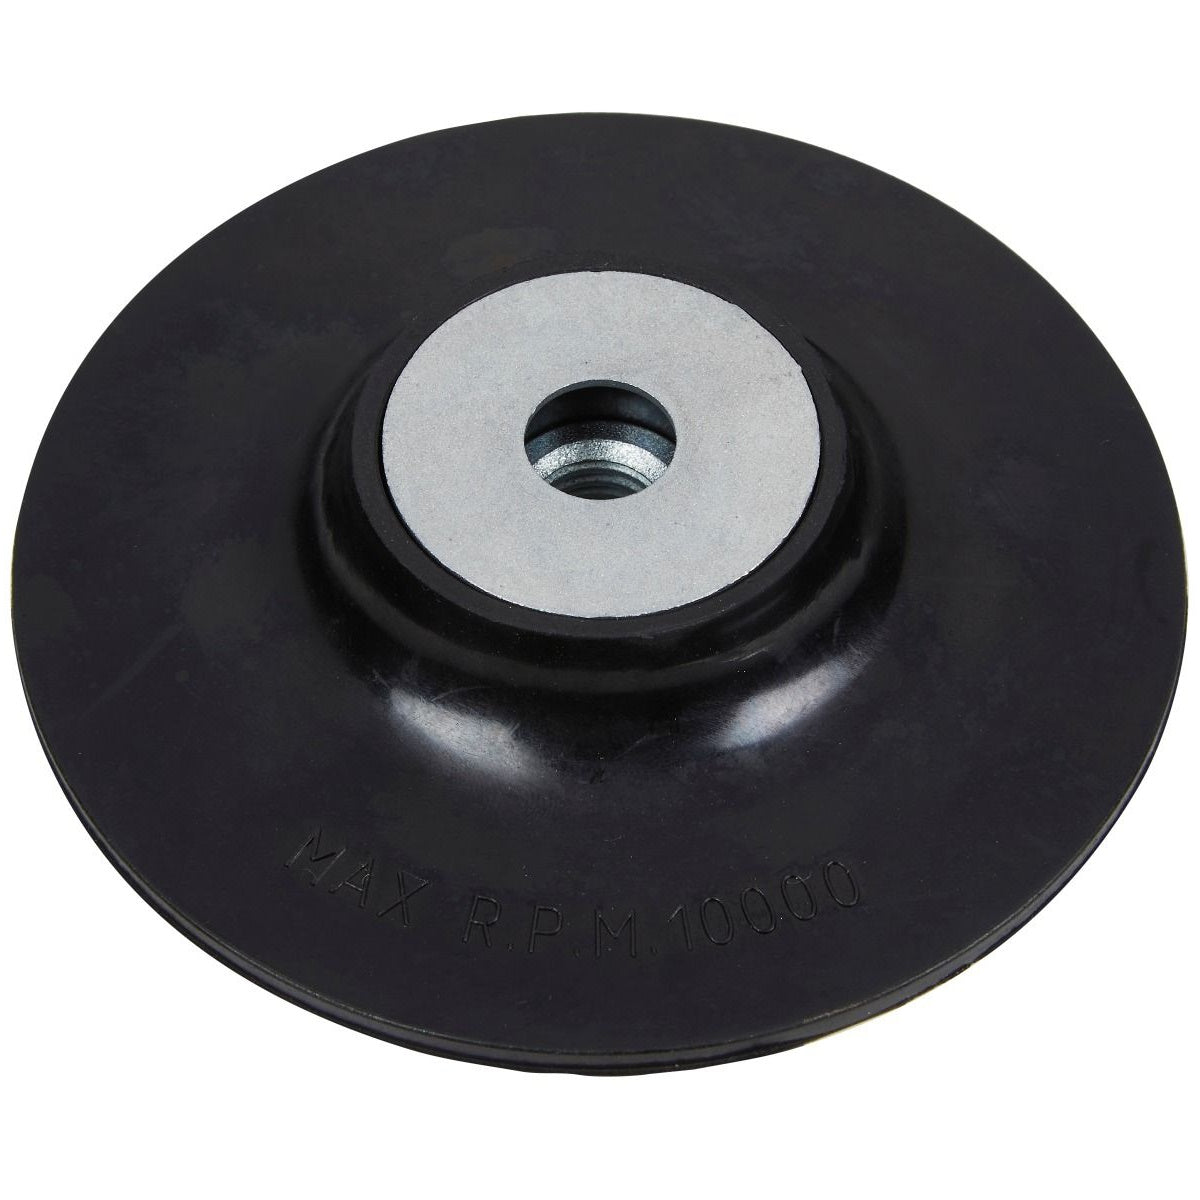 BlueSpot 19640 M14 Rubber Backing Disc 115mm - Premium Sanding from Blue Spot - Just $3.50! Shop now at W Hurst & Son (IW) Ltd